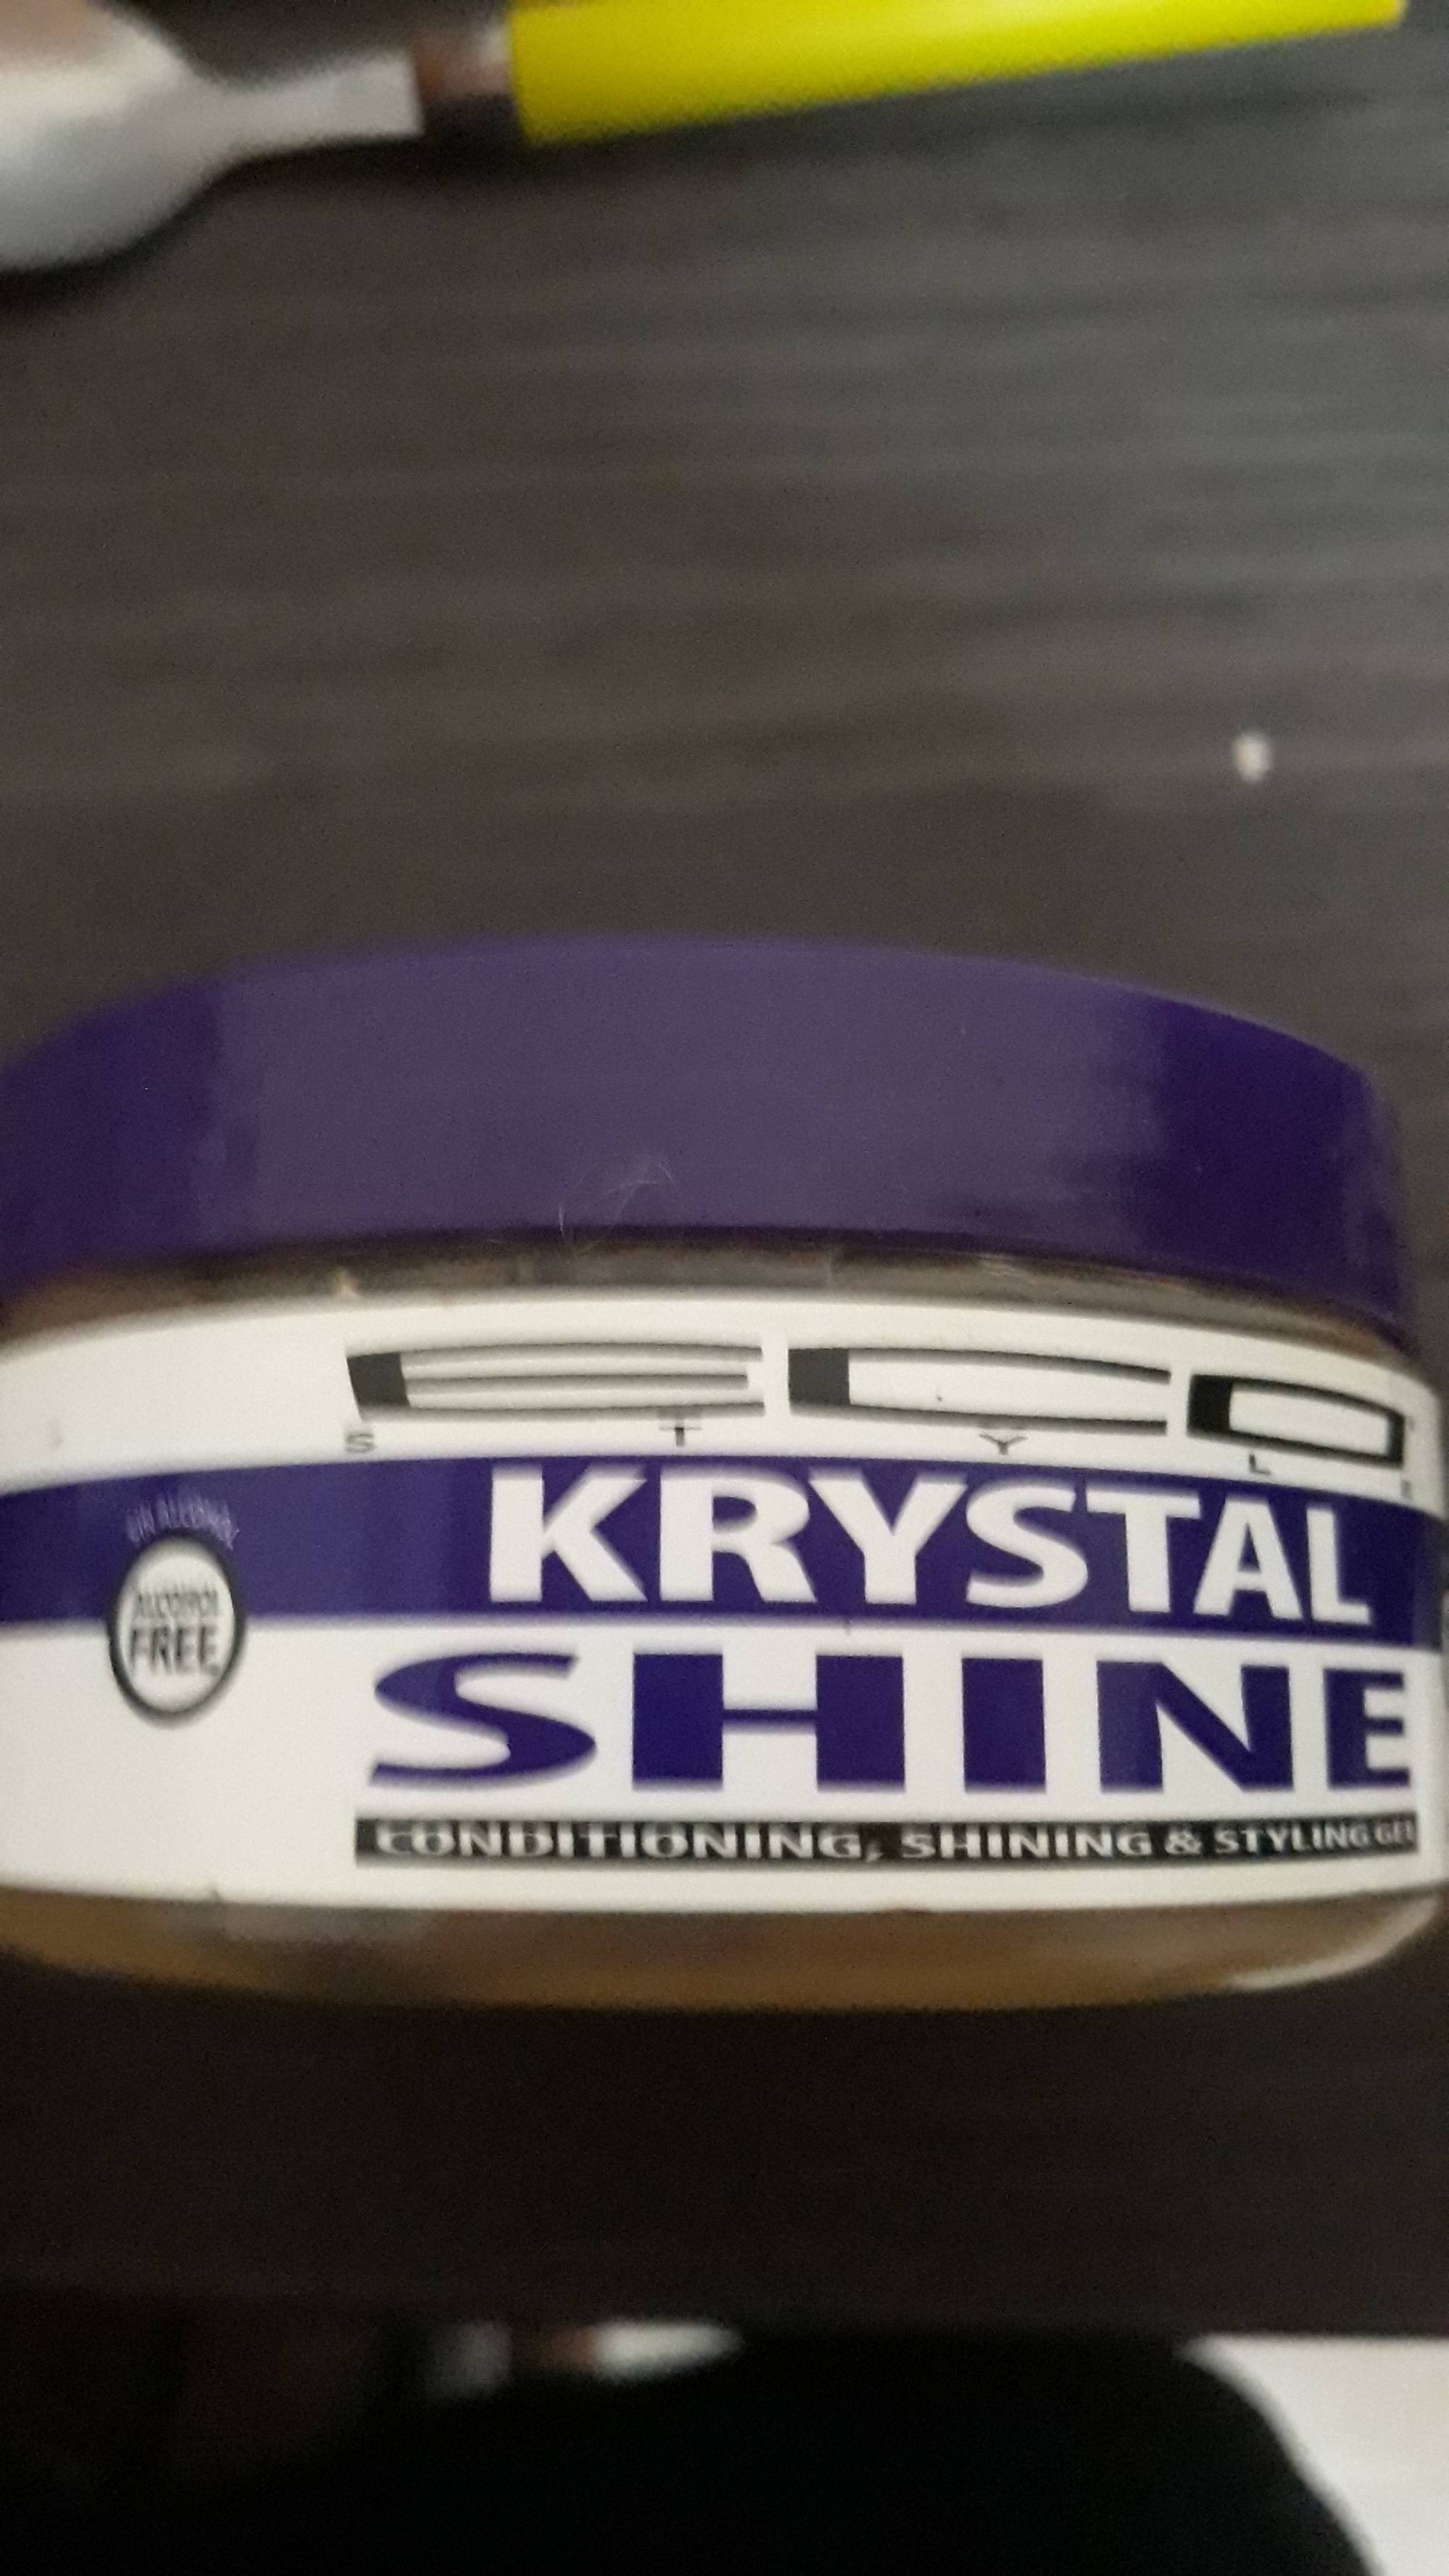 ECO STYLER - Krystal shine - Conditioning shining & styling gel